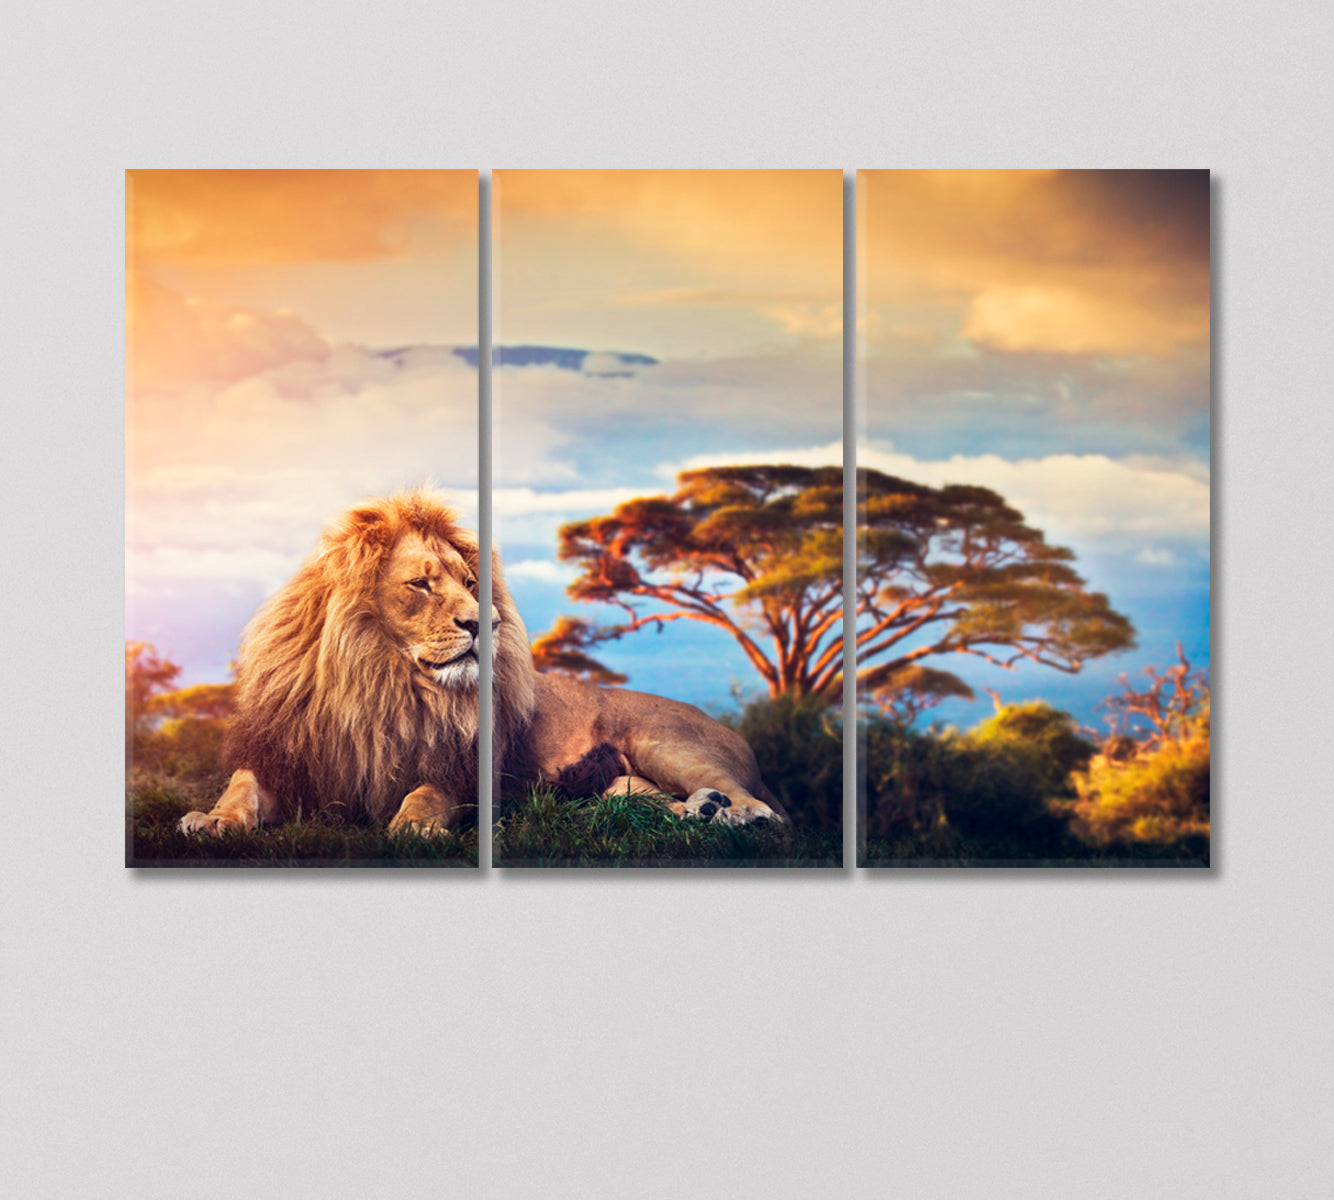 Lion Lying on Grass in Savannah Africa Canvas Print-Canvas Print-CetArt-3 Panels-36x24 inches-CetArt